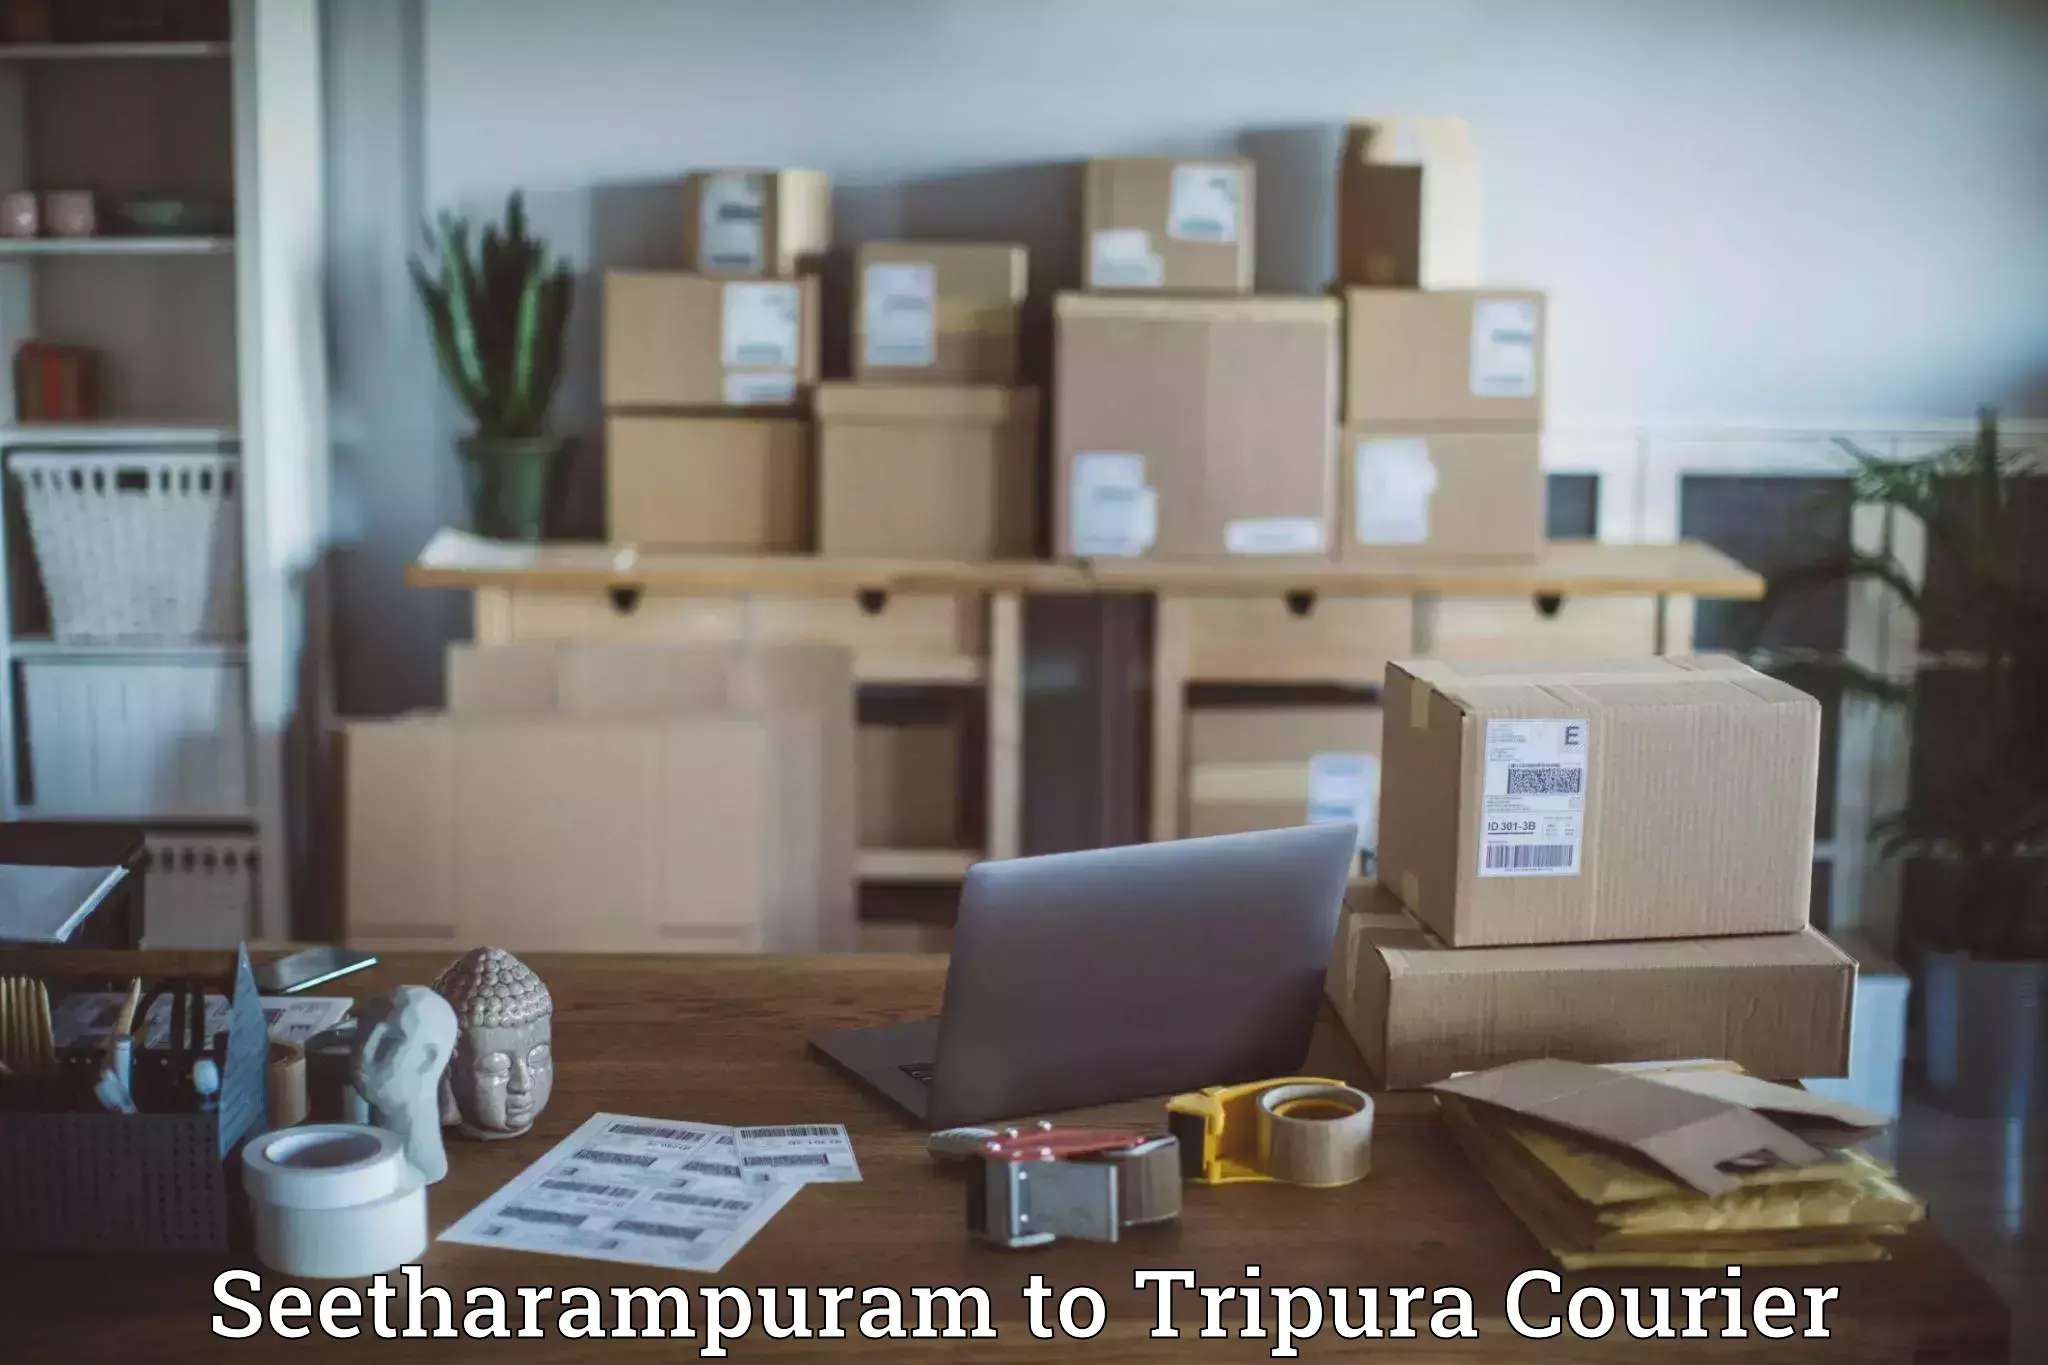 International parcel service Seetharampuram to North Tripura